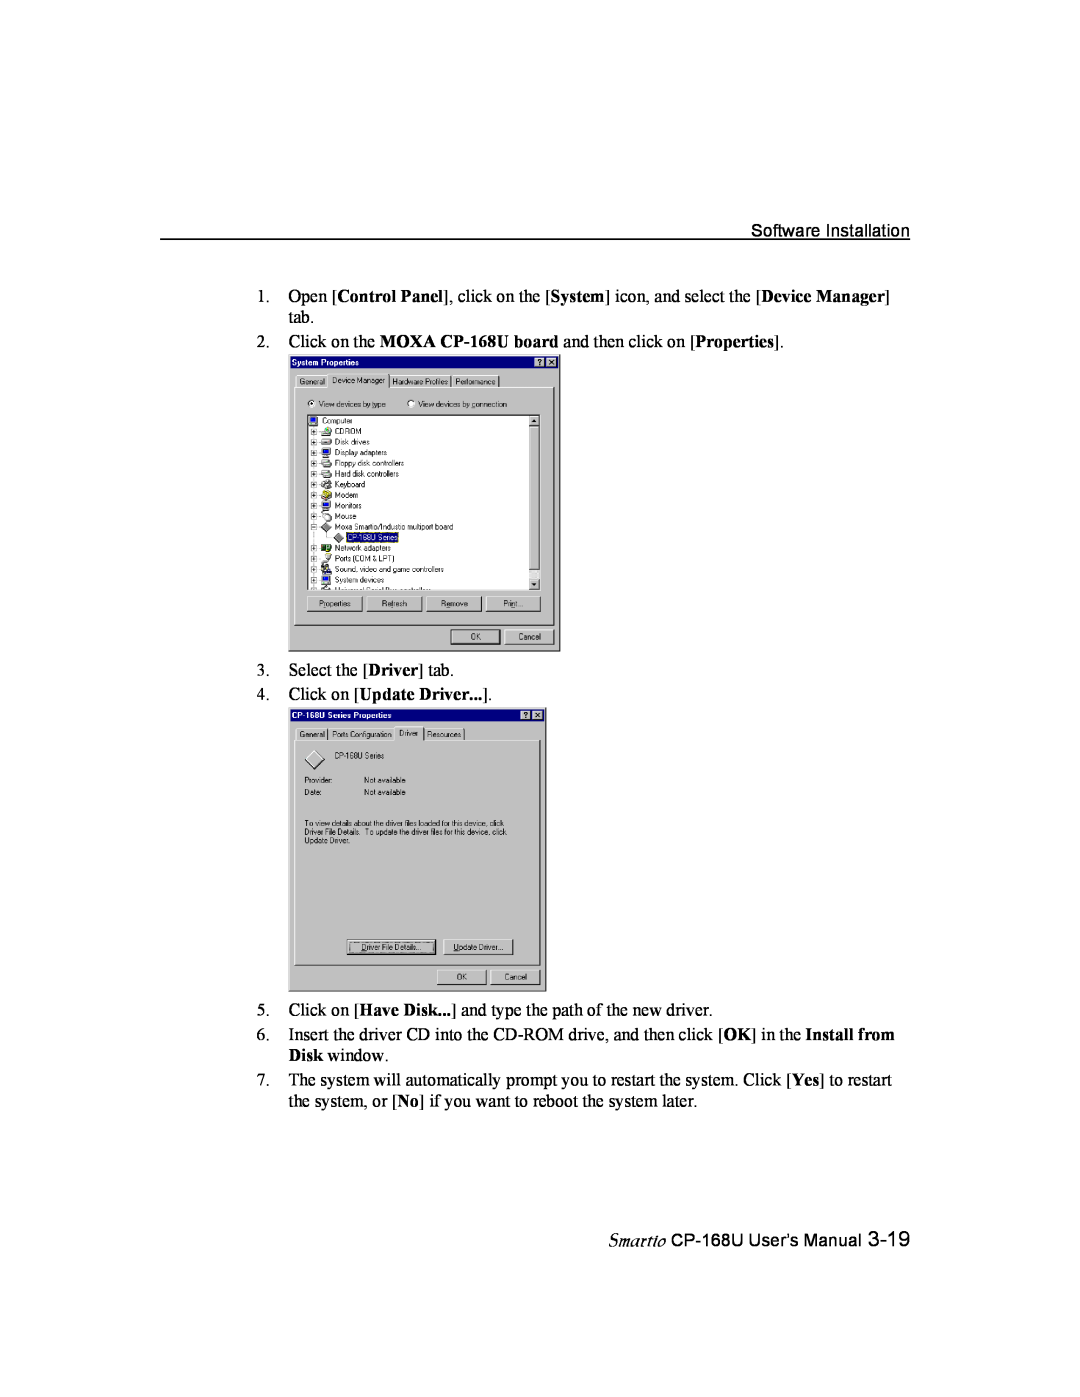 Moxa Technologies CP-168U user manual Click on Update Driver 